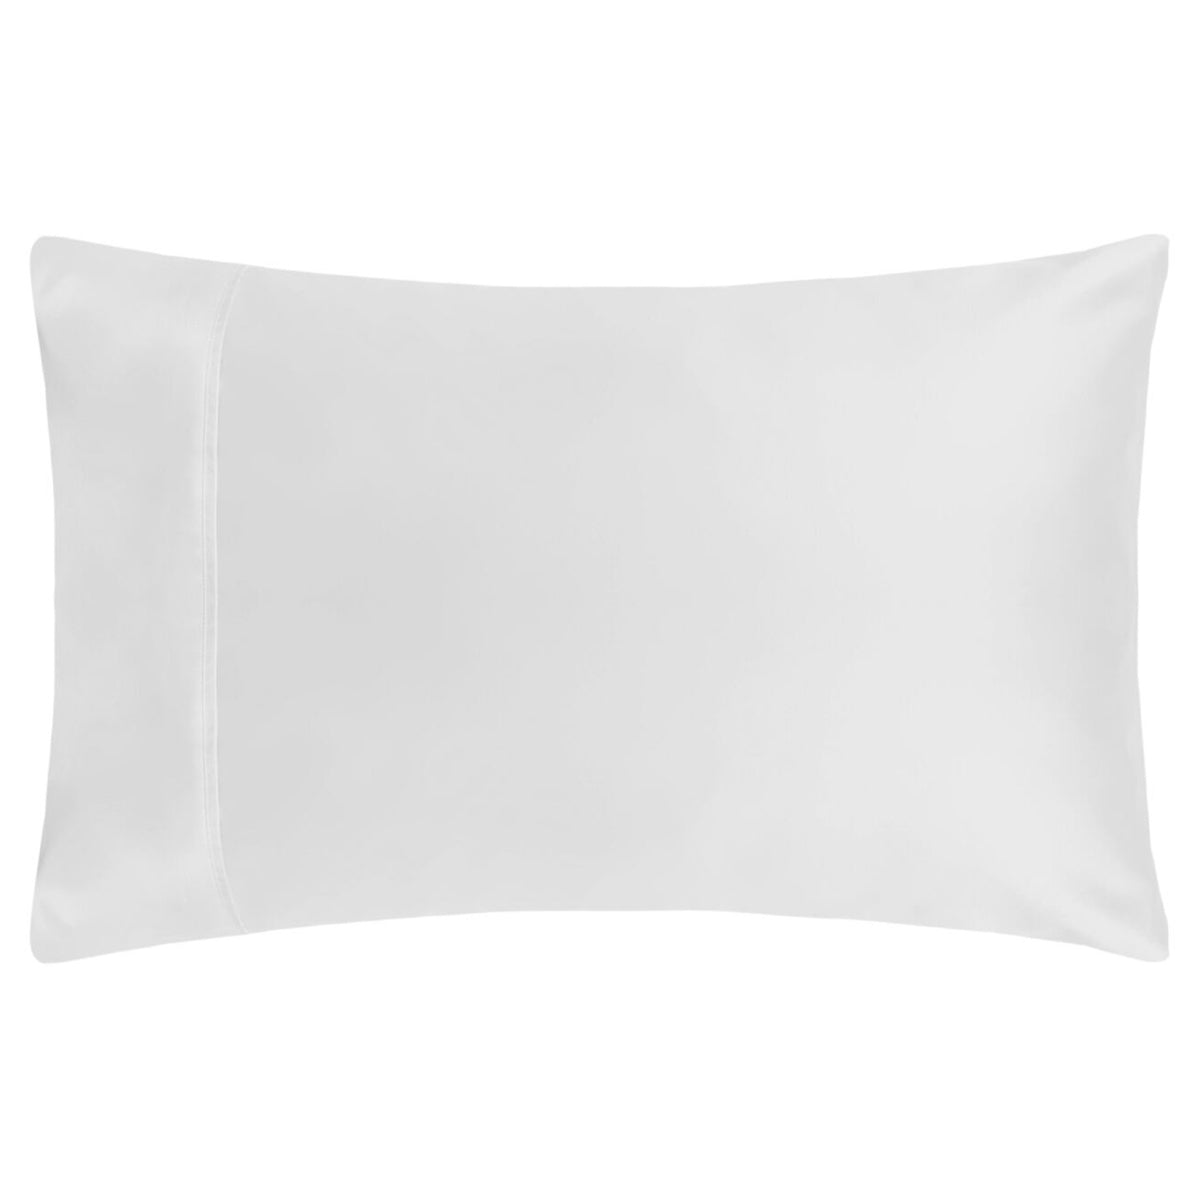 Belledorm 600TC Cotton Sateen Duvet Cover - White